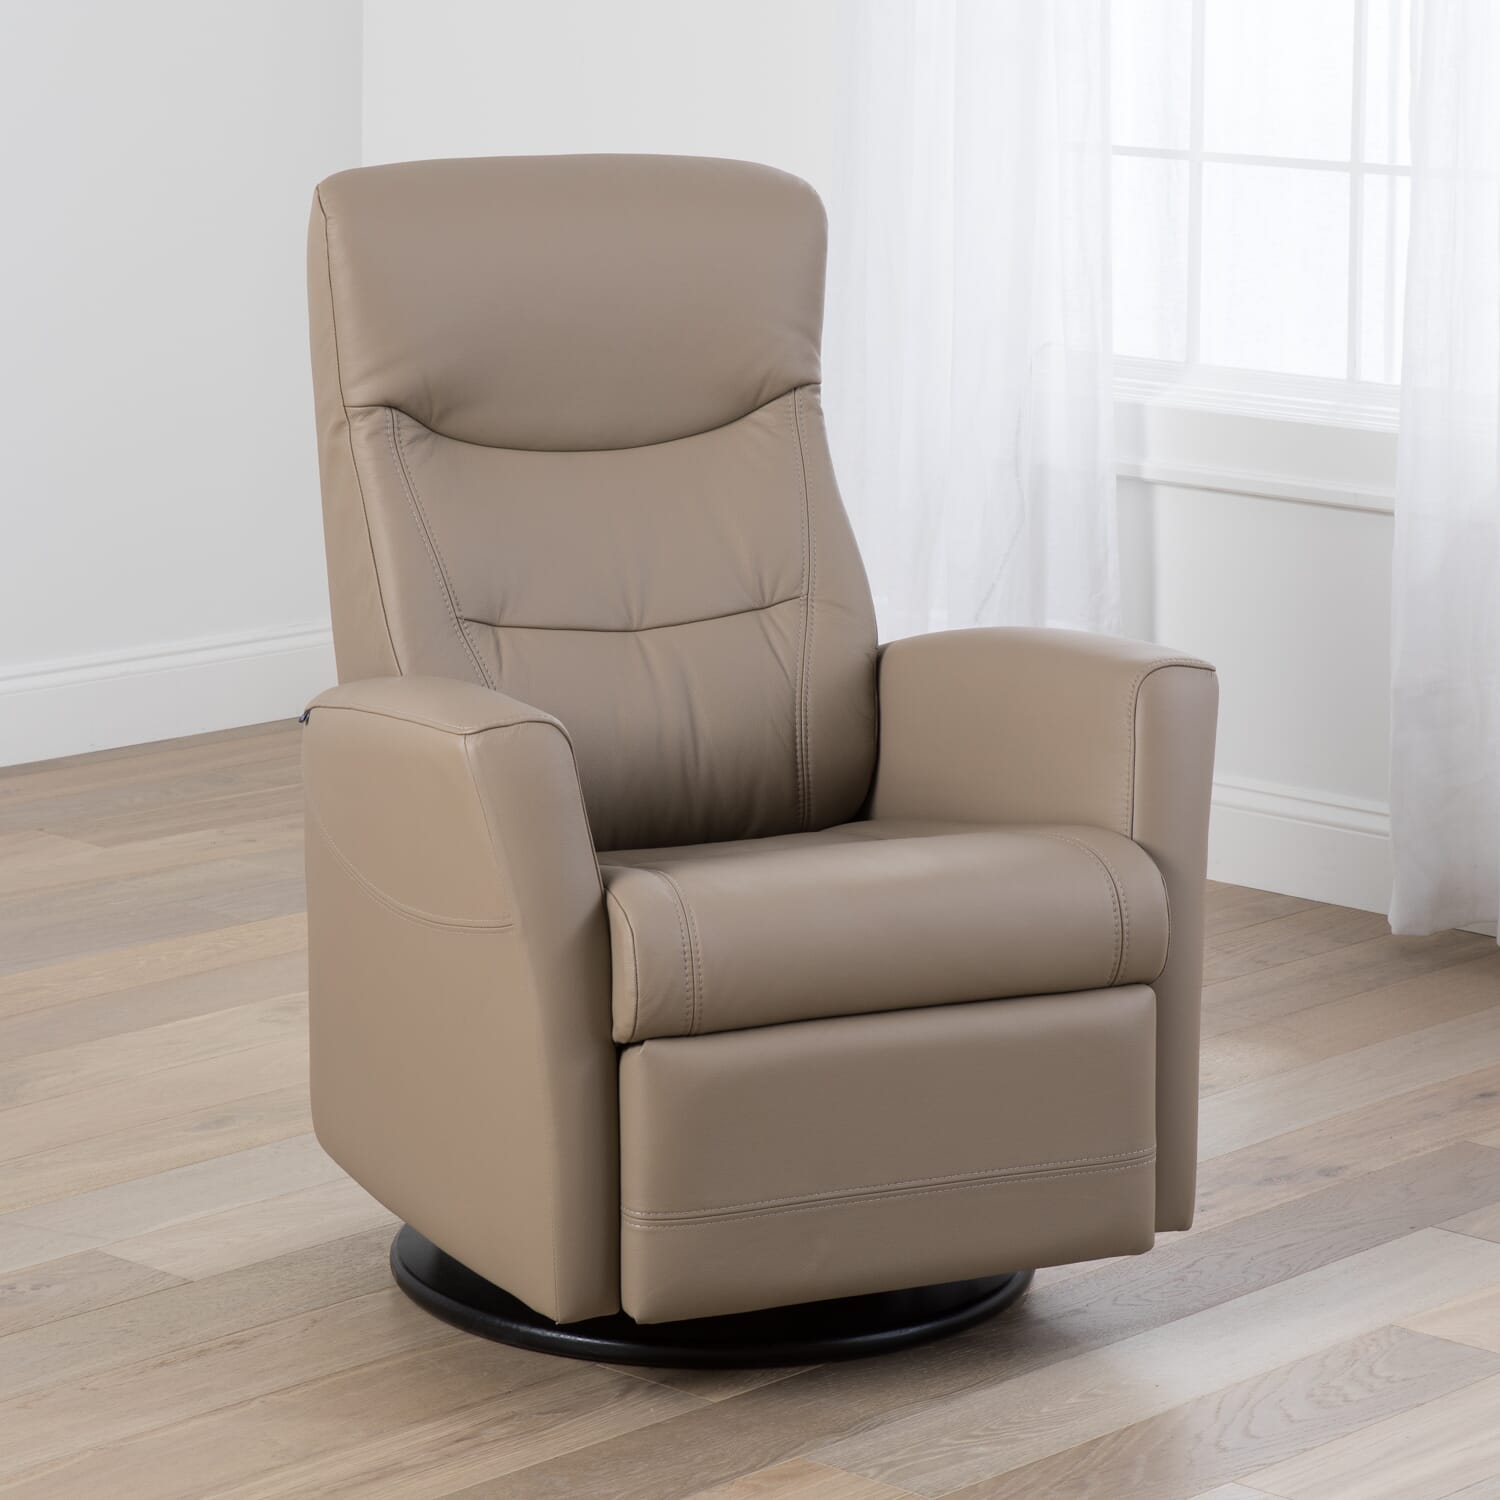 small glider chair